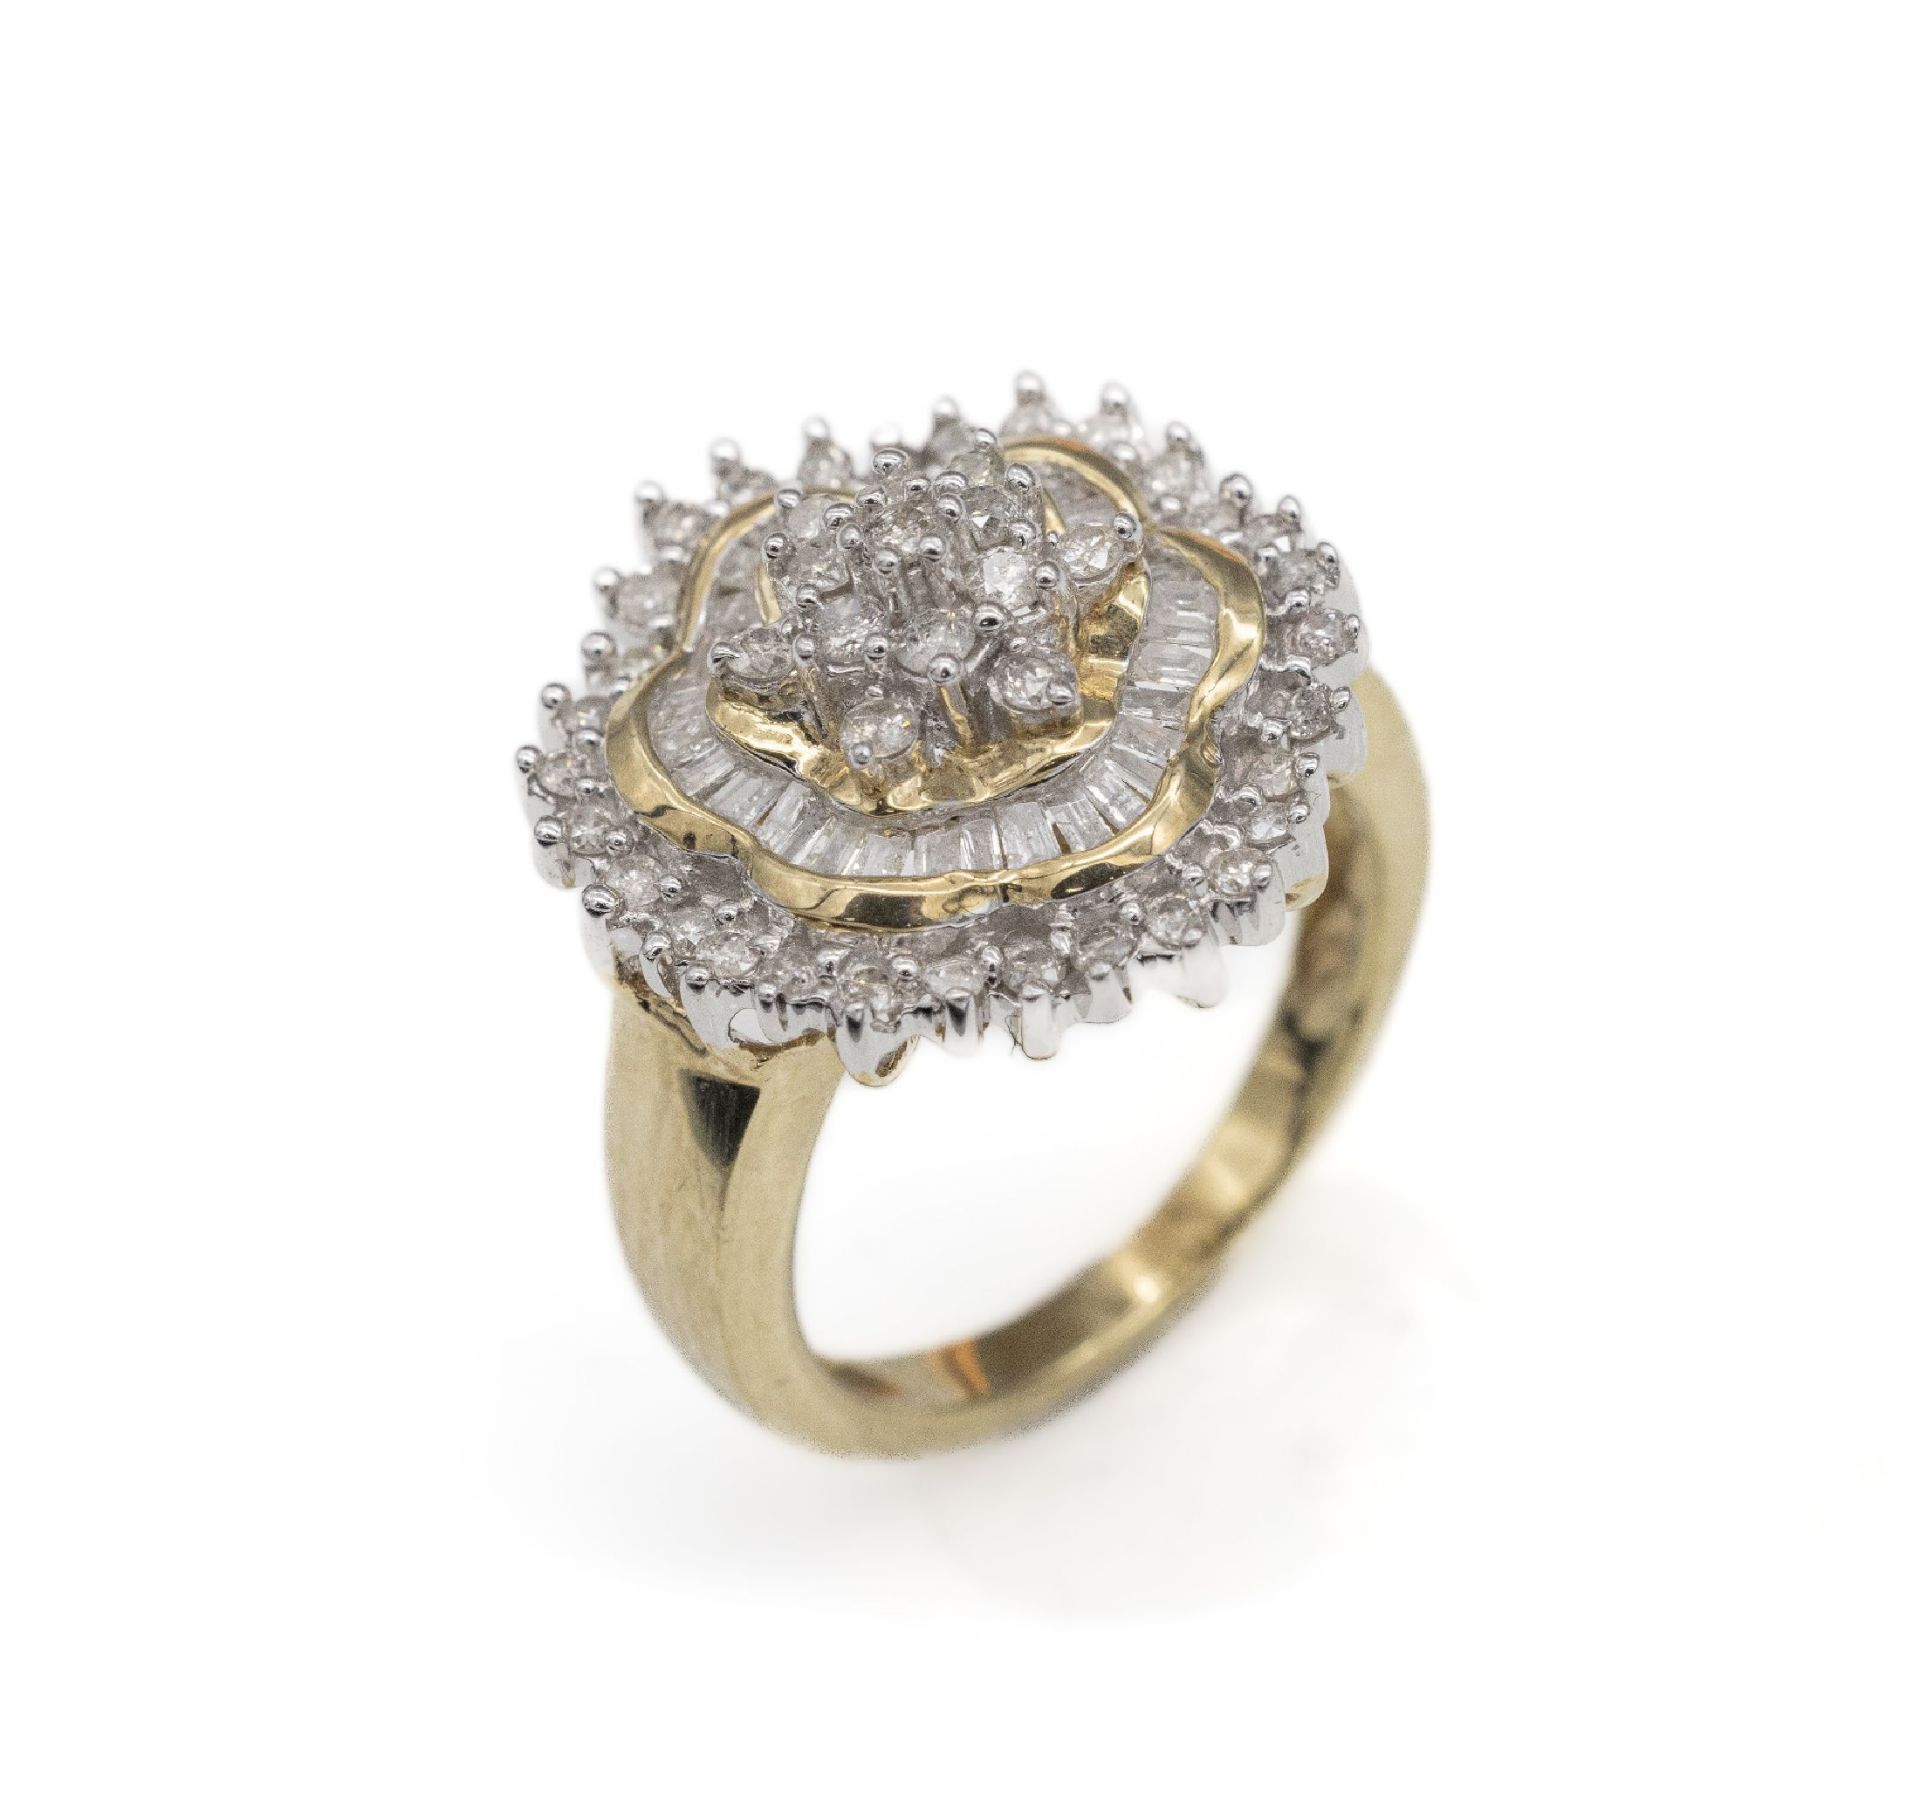 10 kt Gold Diamant-Ring, GG/WG 417/000, 43 Brillanten